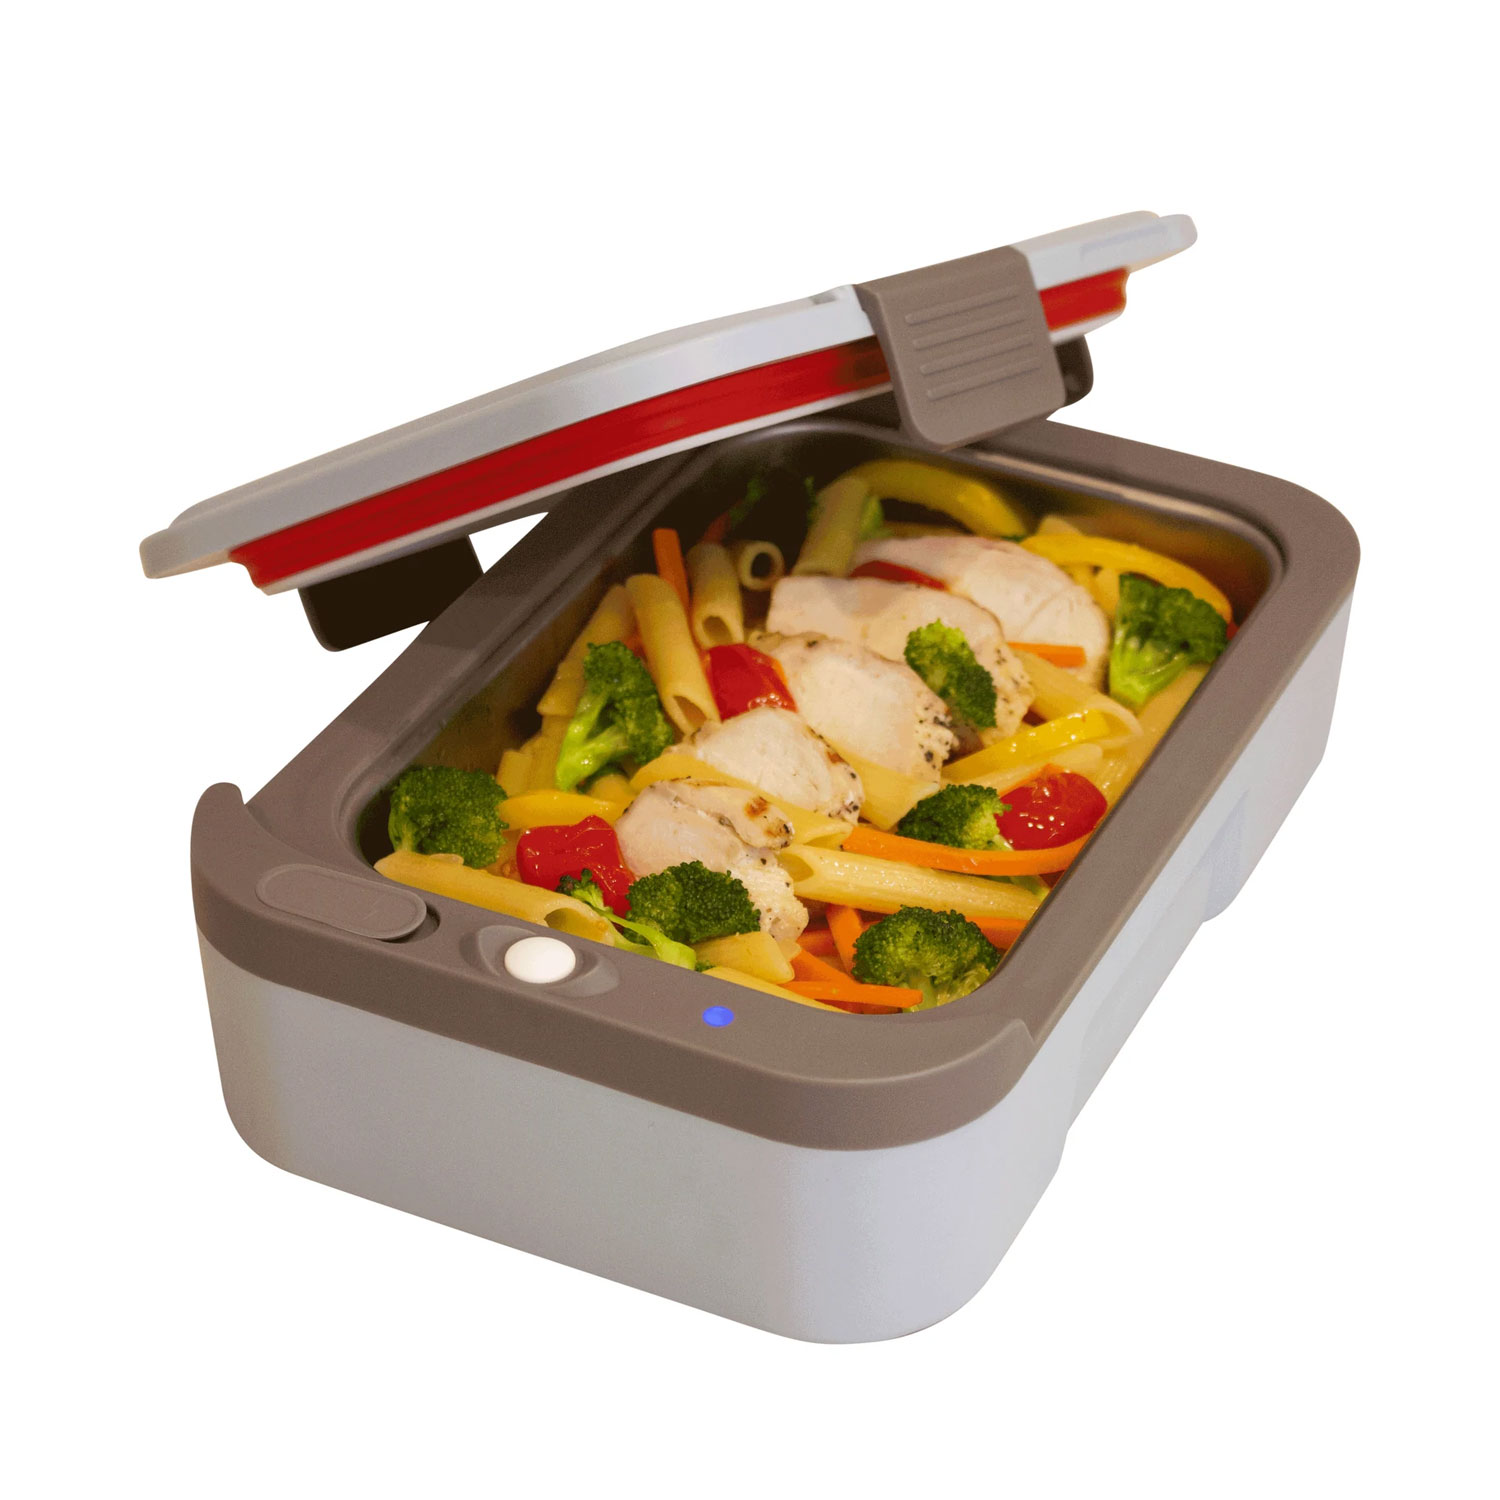 Hot Bento Self-Heating Lunch Box